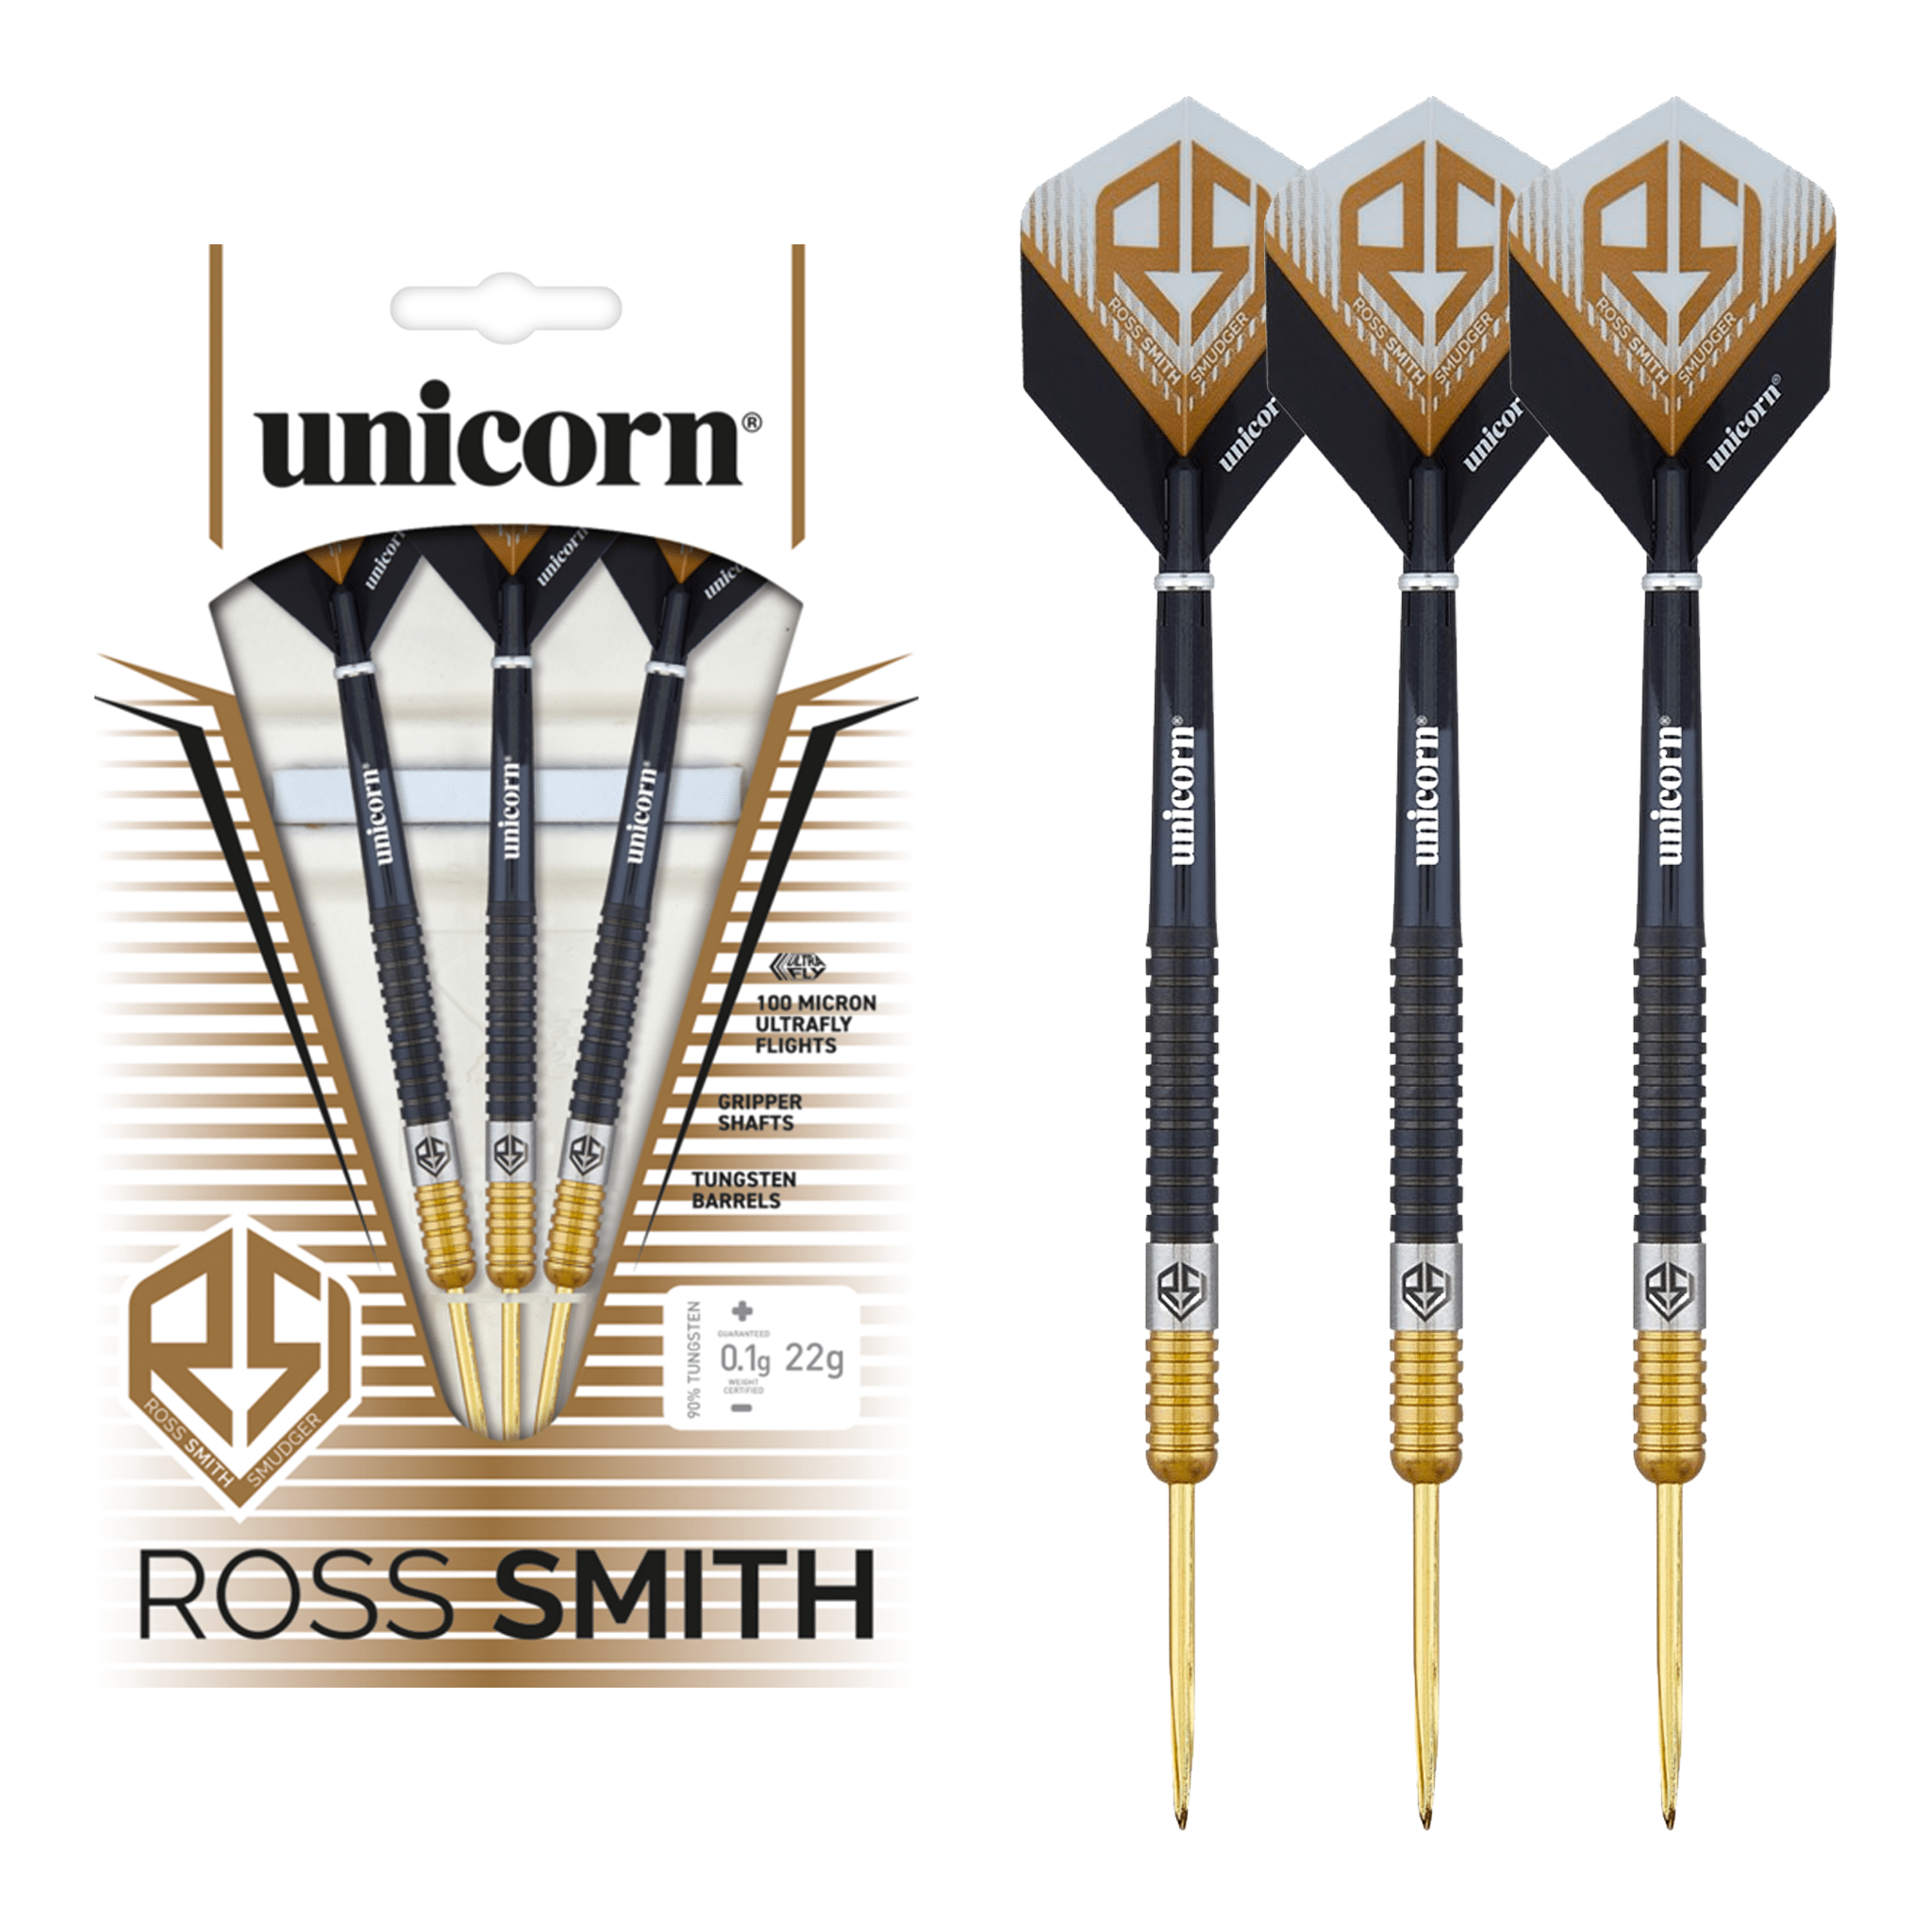 Unicorn Ross Smith Two-Tone - 90% Tungsten Steel Tip Darts 20 Grams Darts